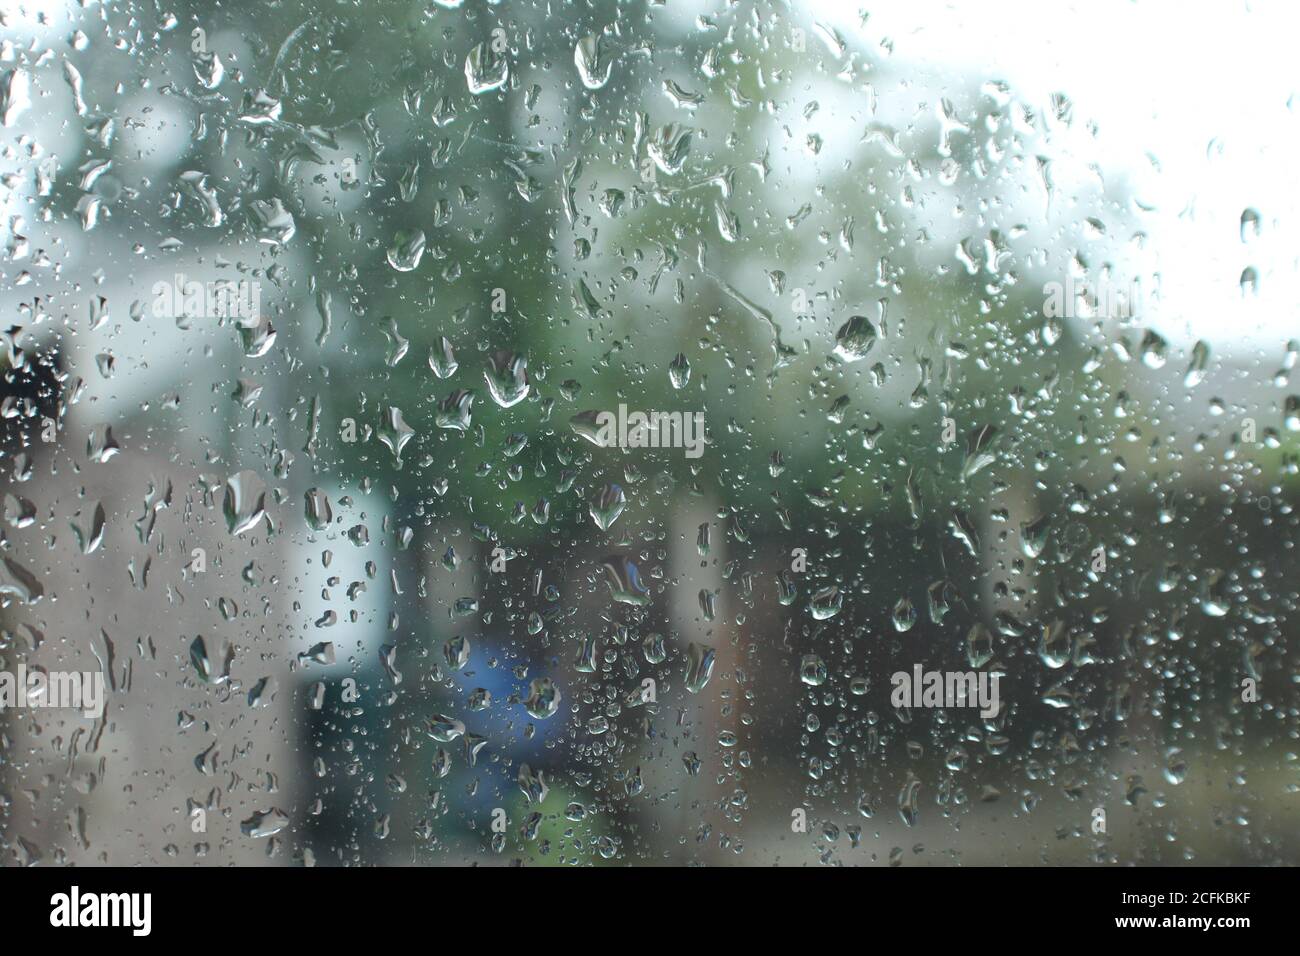 rain droplets on glass window Stock Photo